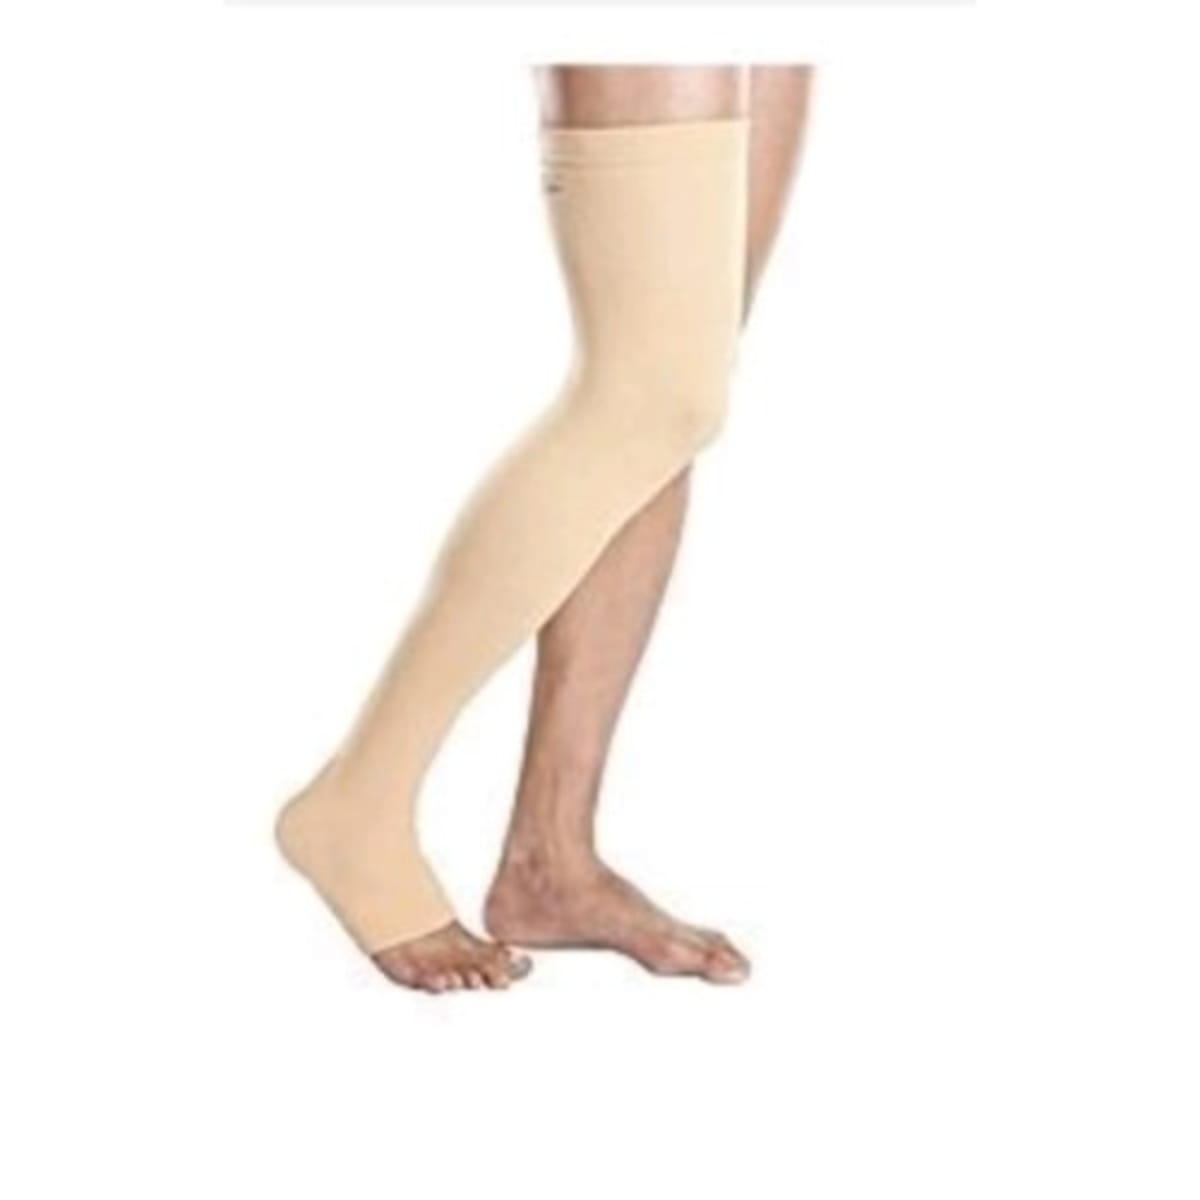 Medical Stockings Online